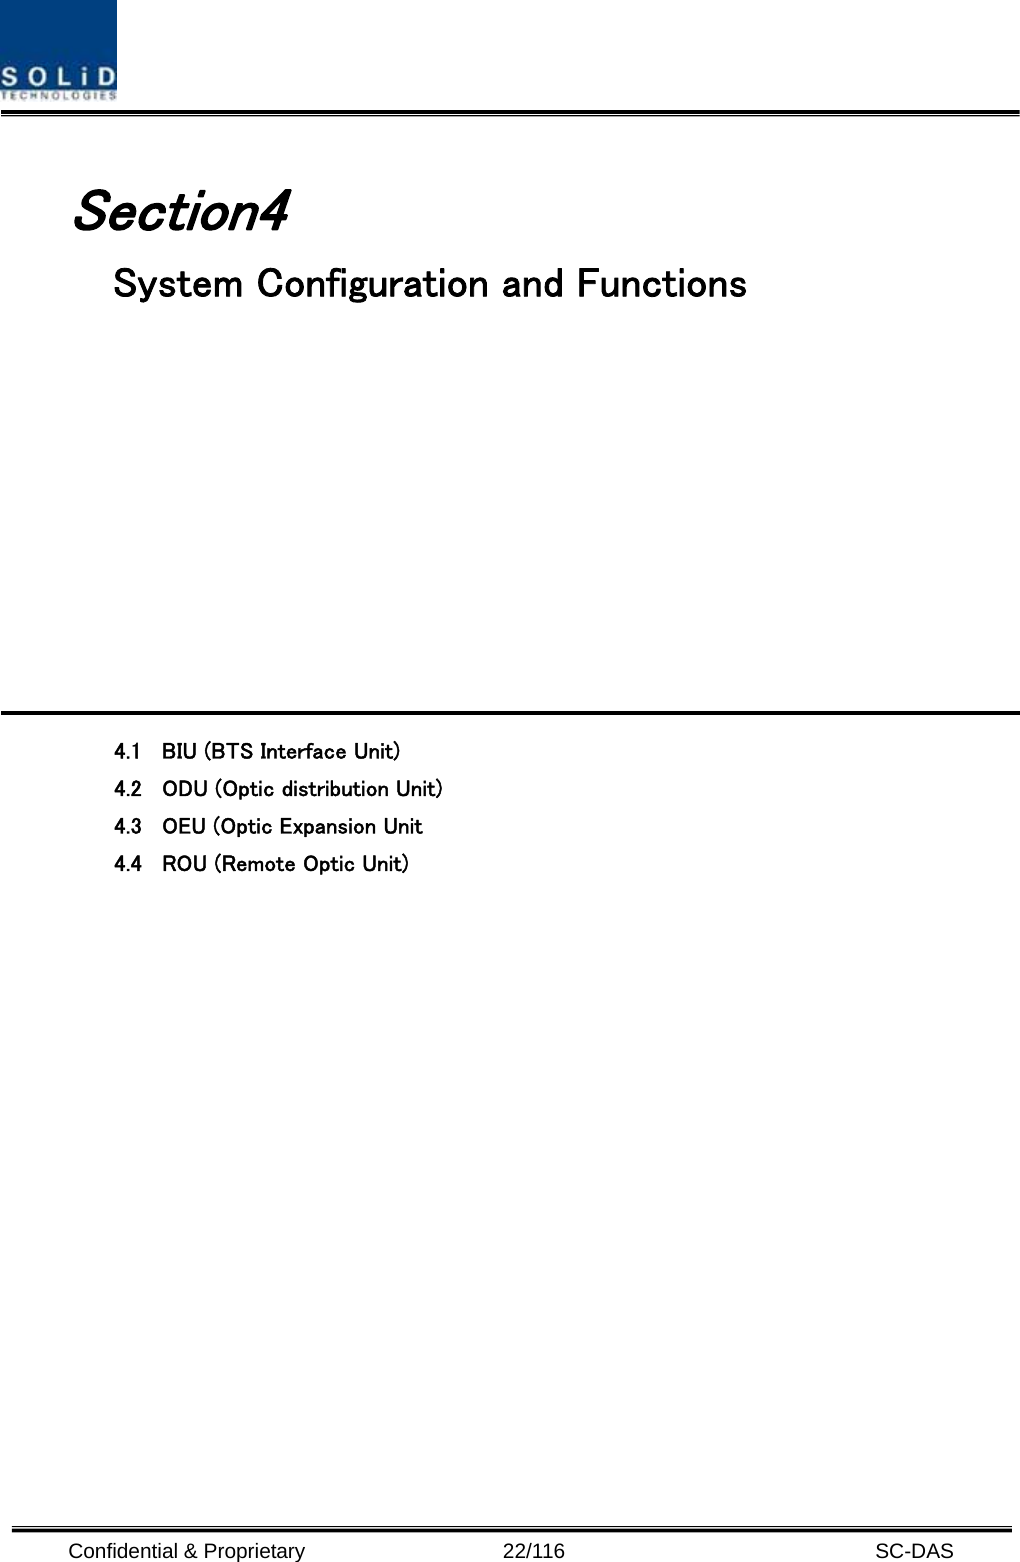  Confidential &amp; Proprietary                   22/116   SC-DAS  Section4                               System Configuration and Functions            4.1 BIU (BTS Interface Unit)  4.2 ODU (Optic distribution Unit)  4.3 OEU (Optic Expansion Unit  4.4 ROU (Remote Optic Unit)                     